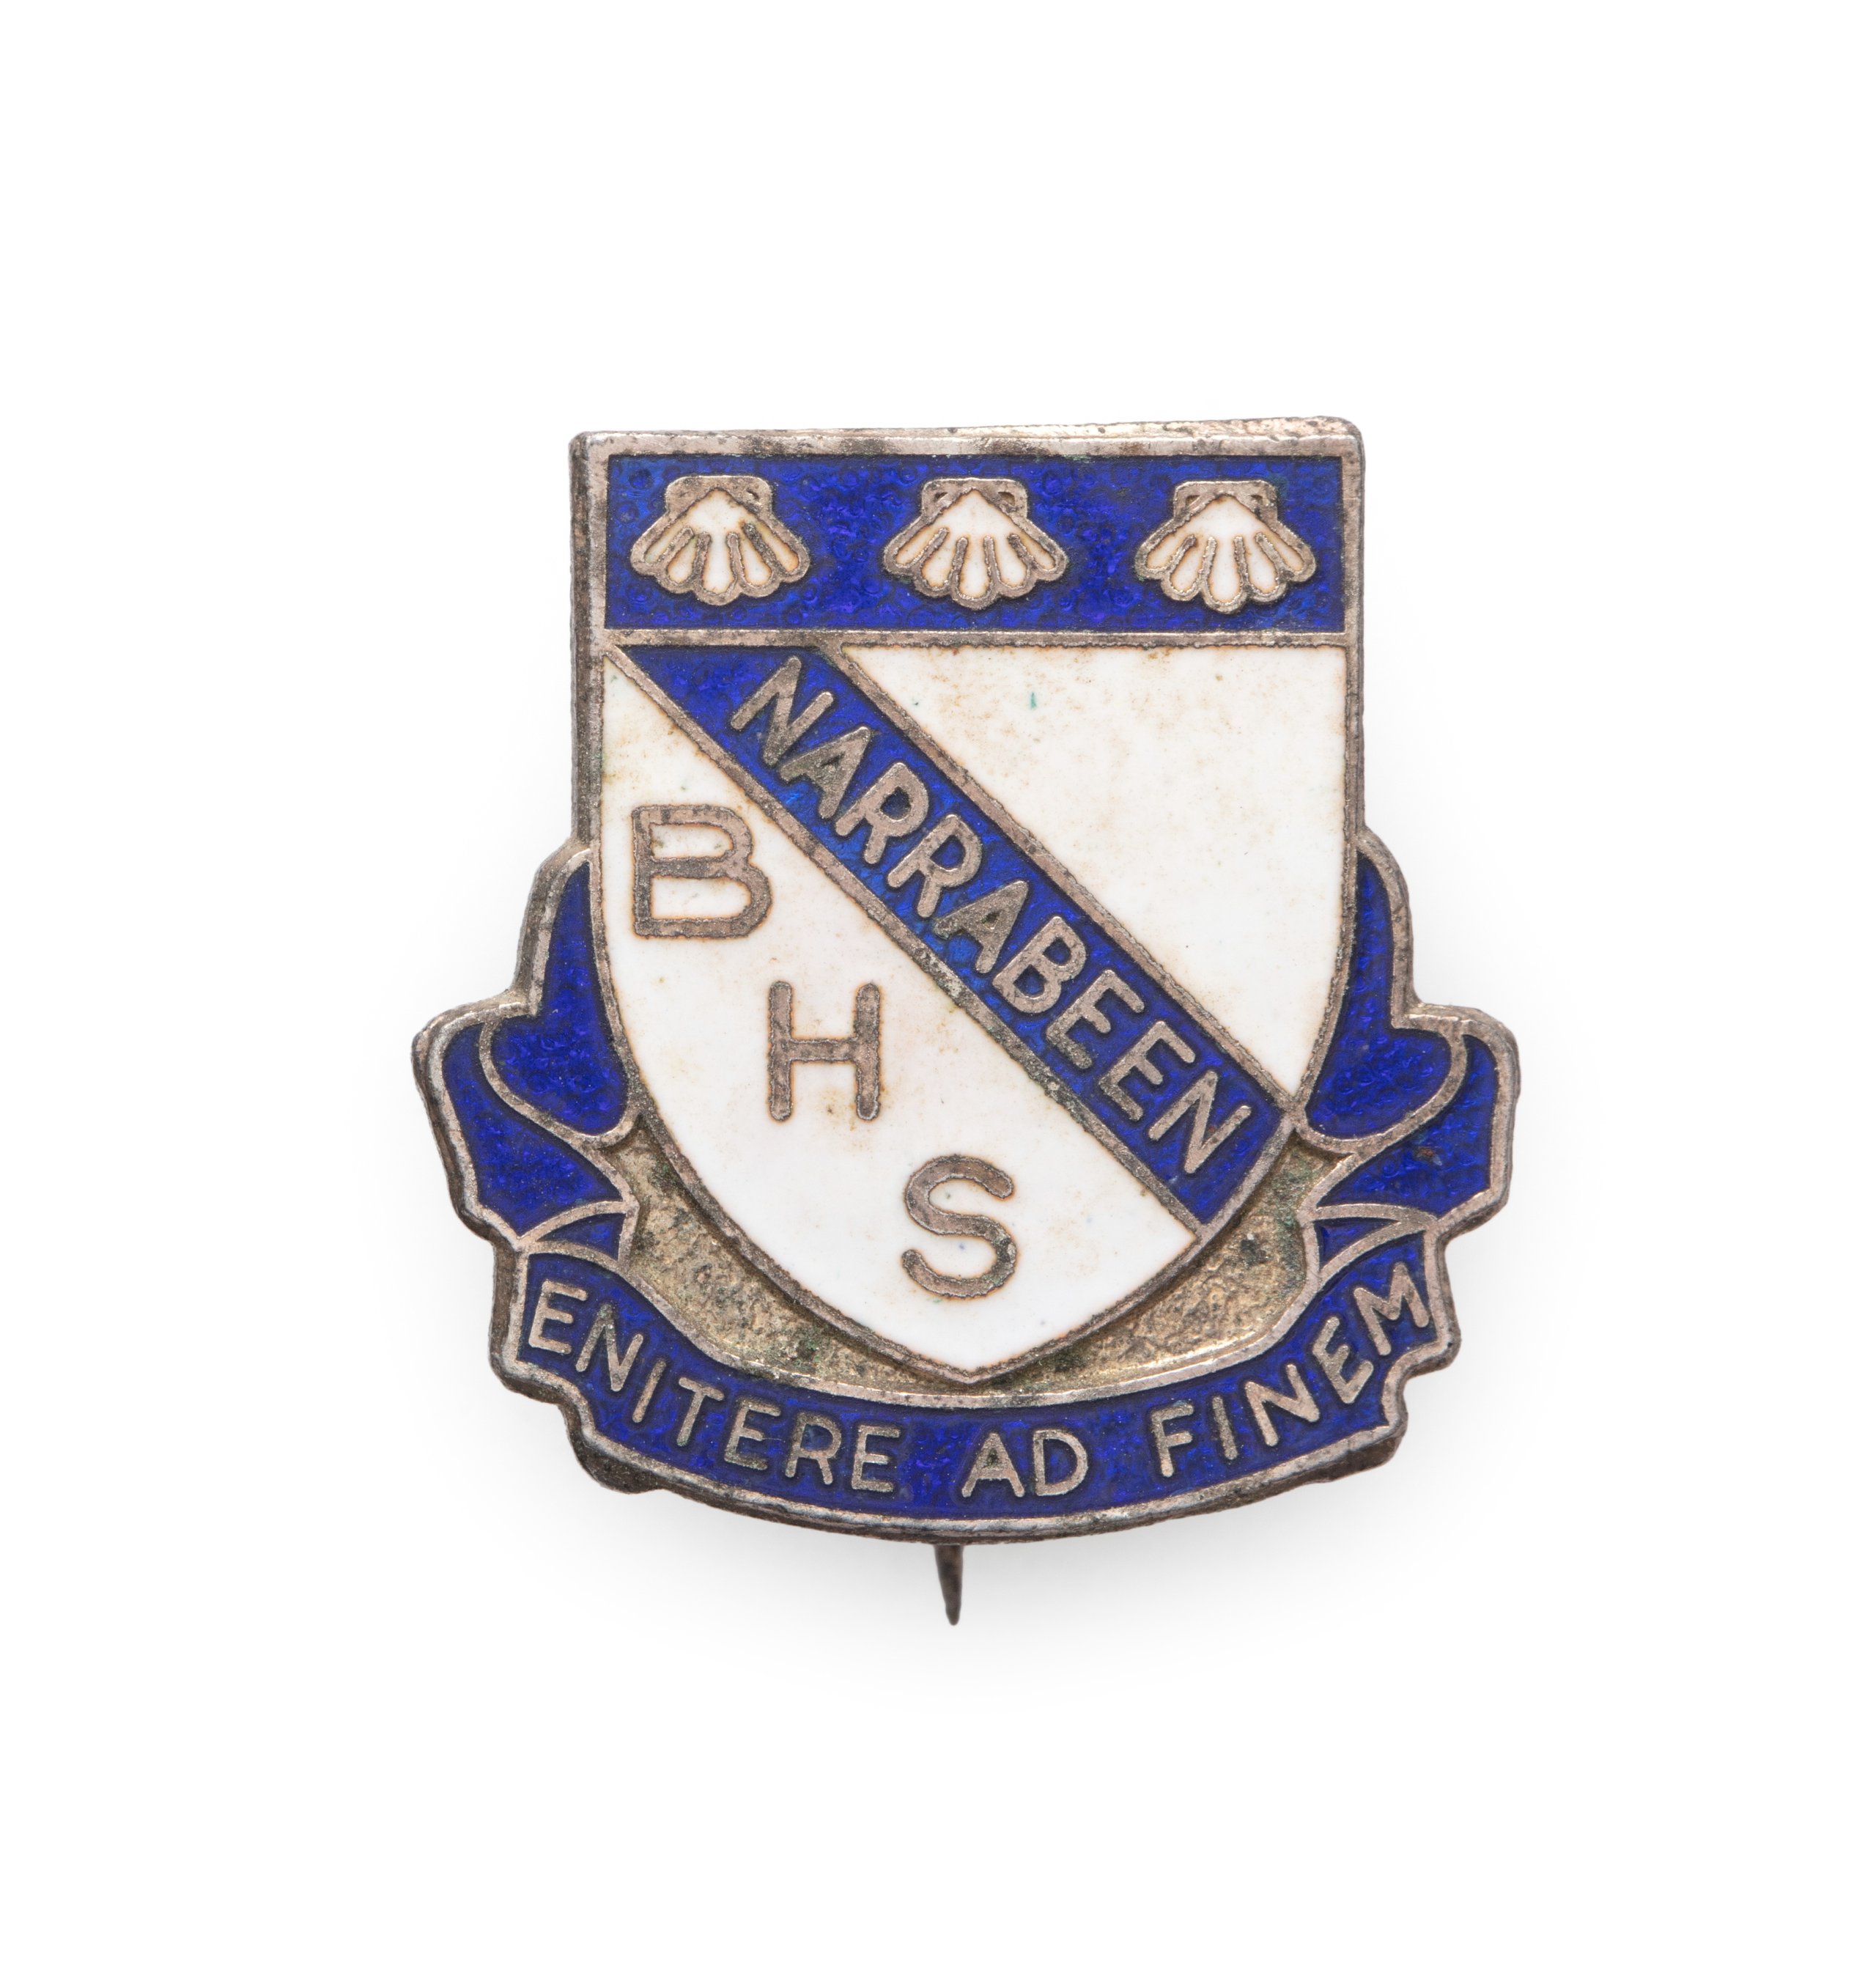 'Enitere Ad Finem' school badge